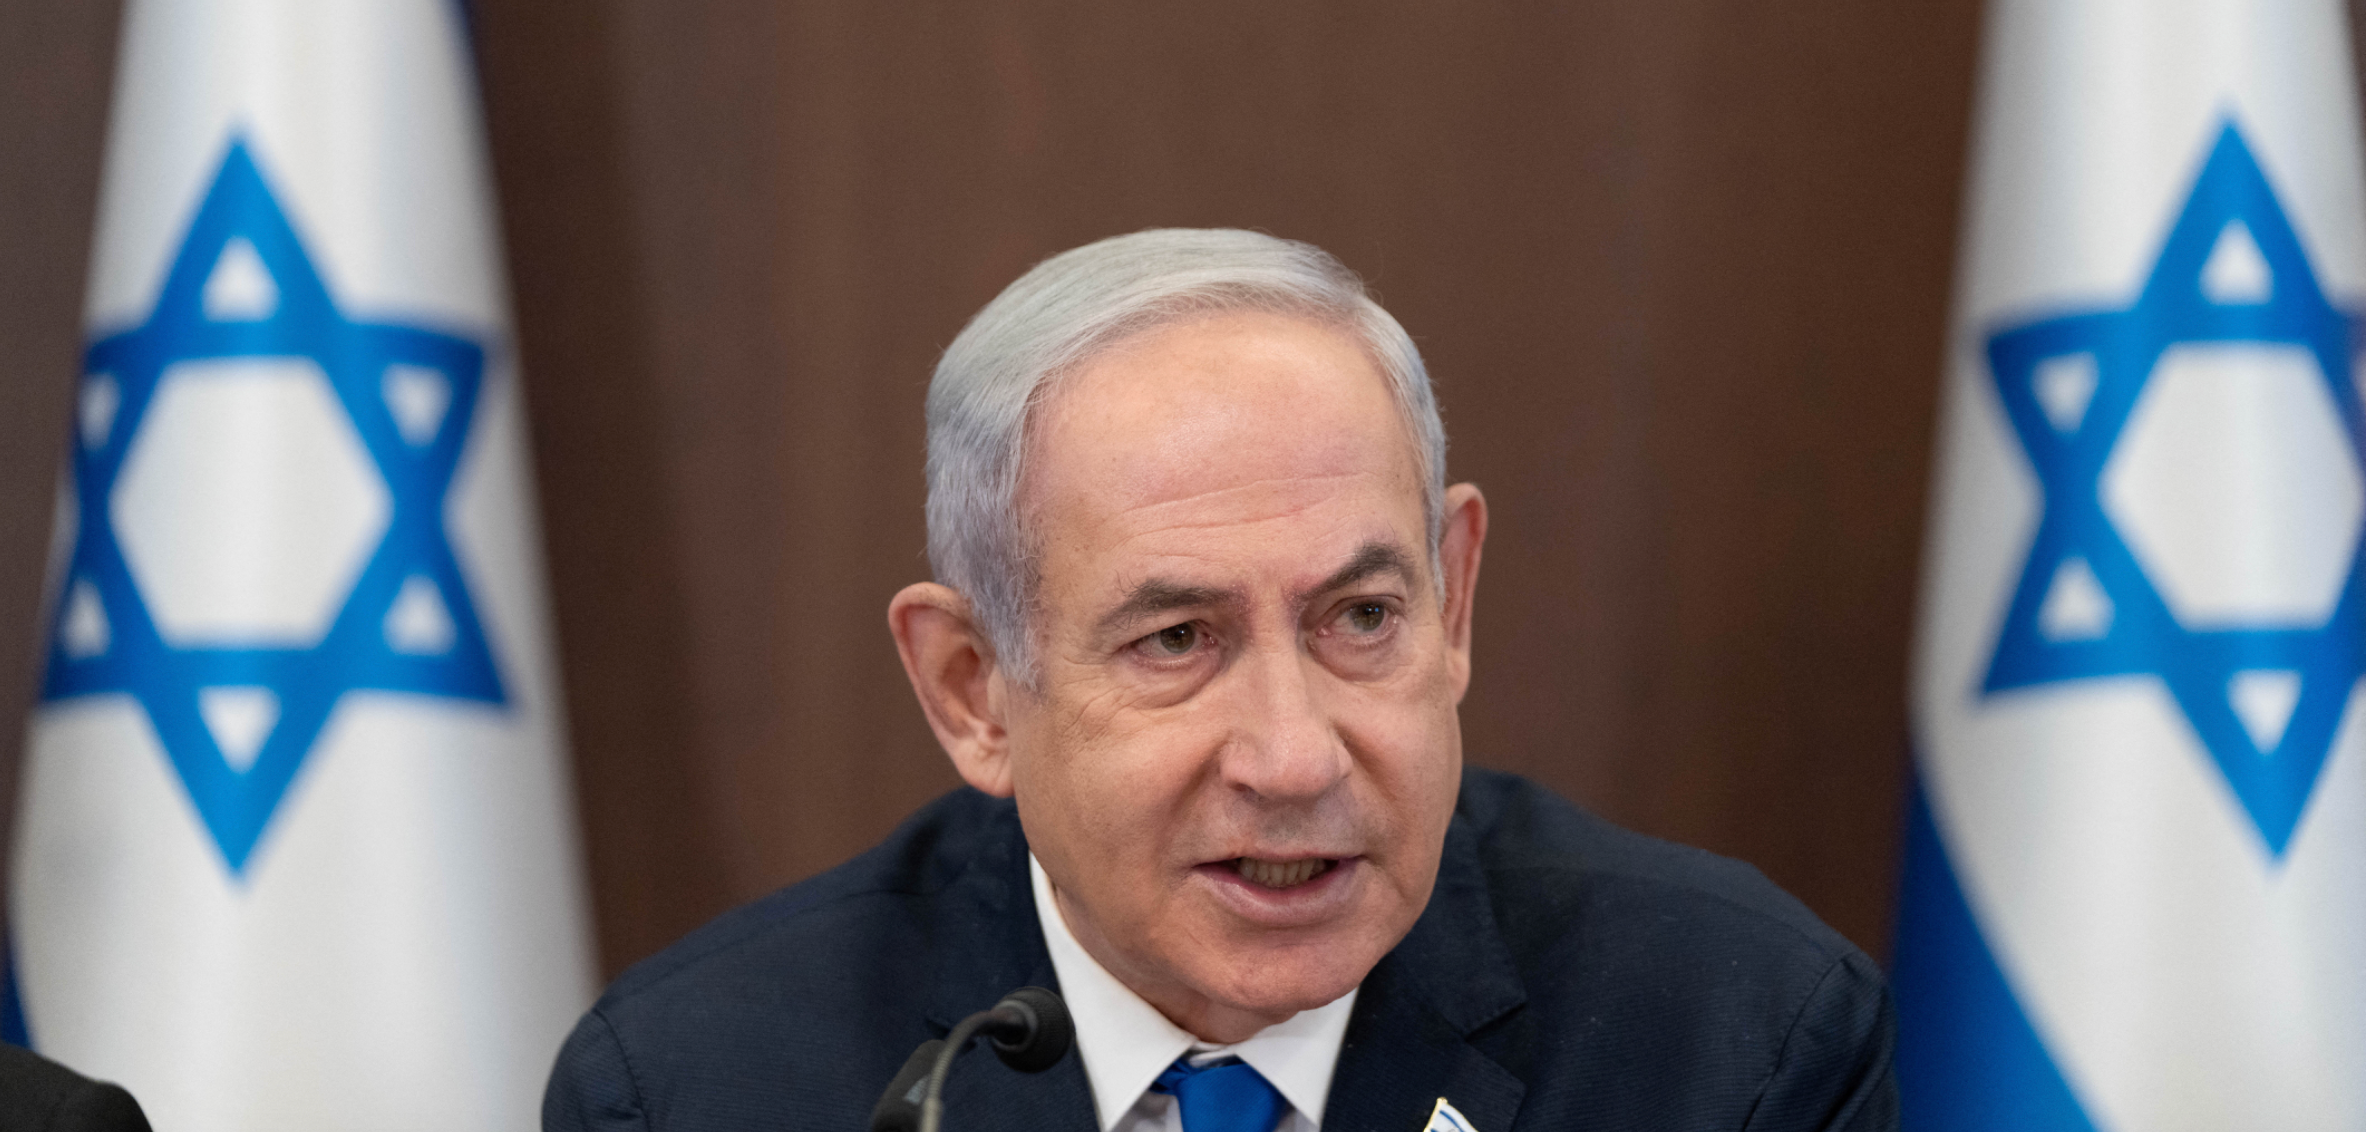 Netanyahu disbands his inner war cabinet, Israeli official says